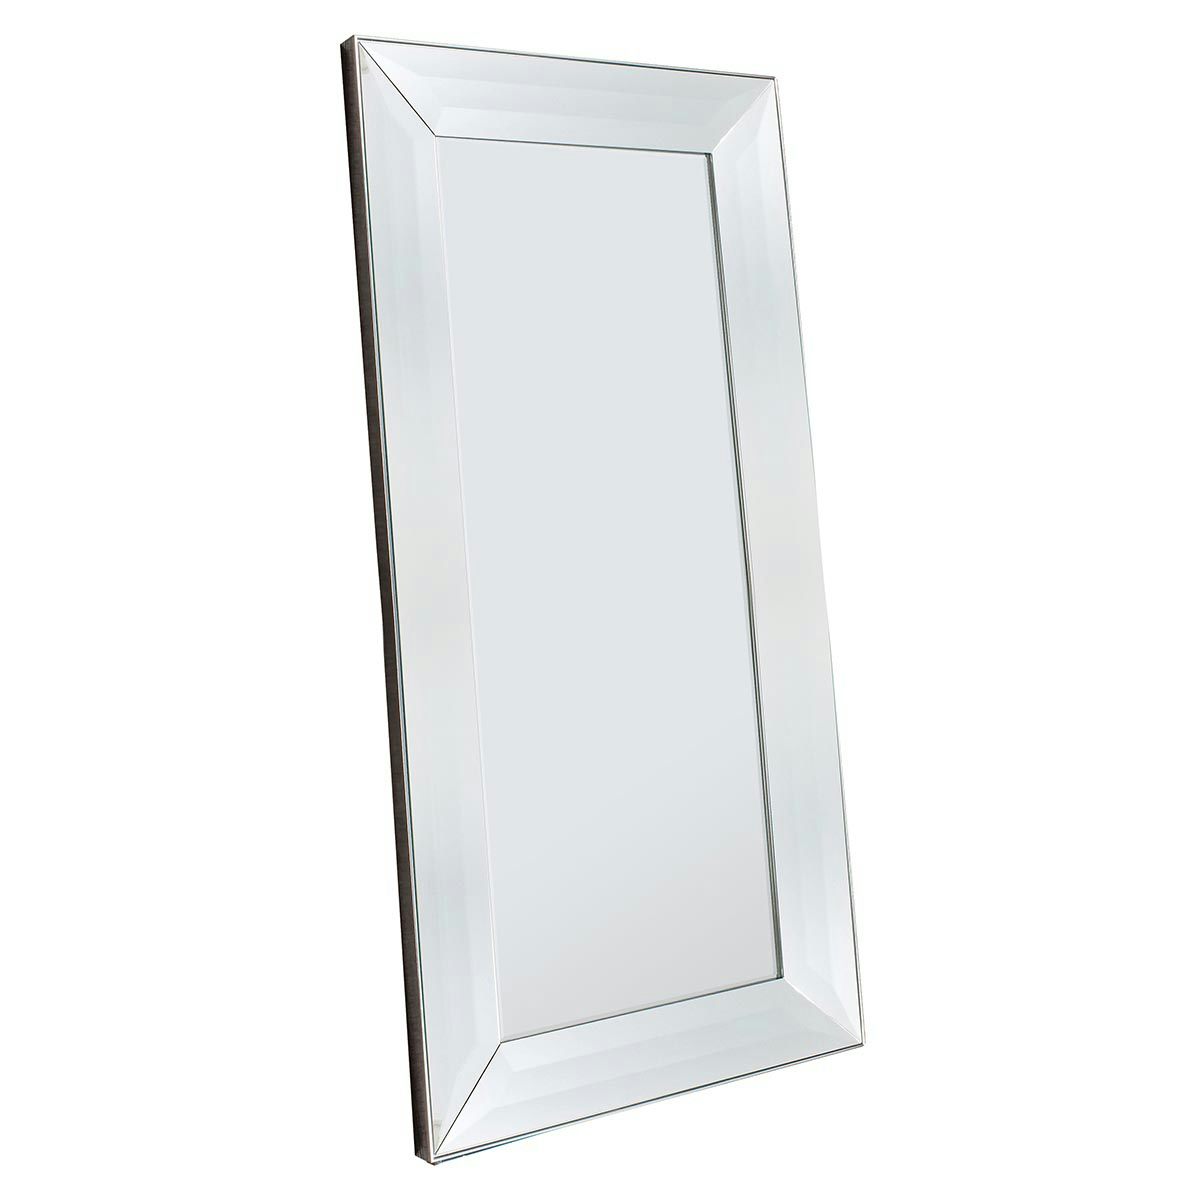 Accents Ferrara bevelledsilver  leaner mirror 1825 x 915mm